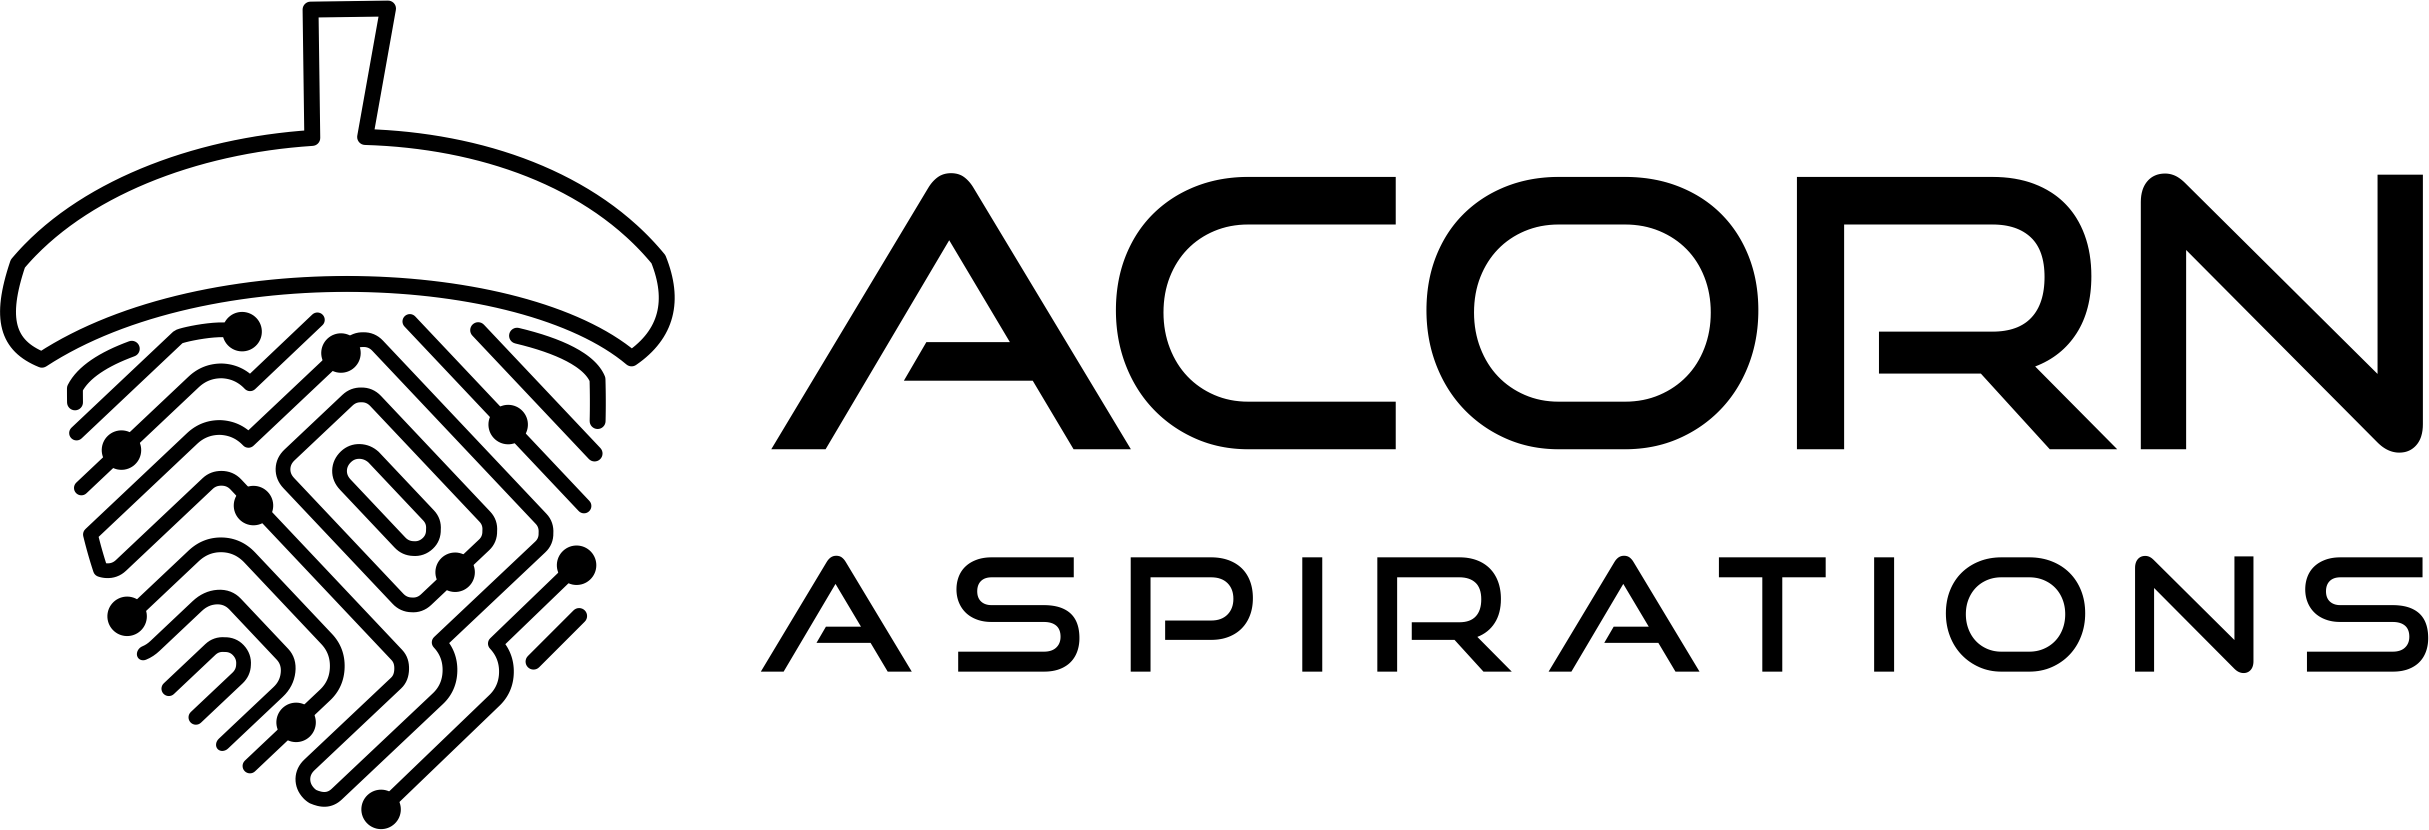 Acorn Logo - Acorn Aspirations - Hackathons and Tech Events Designed for Teens